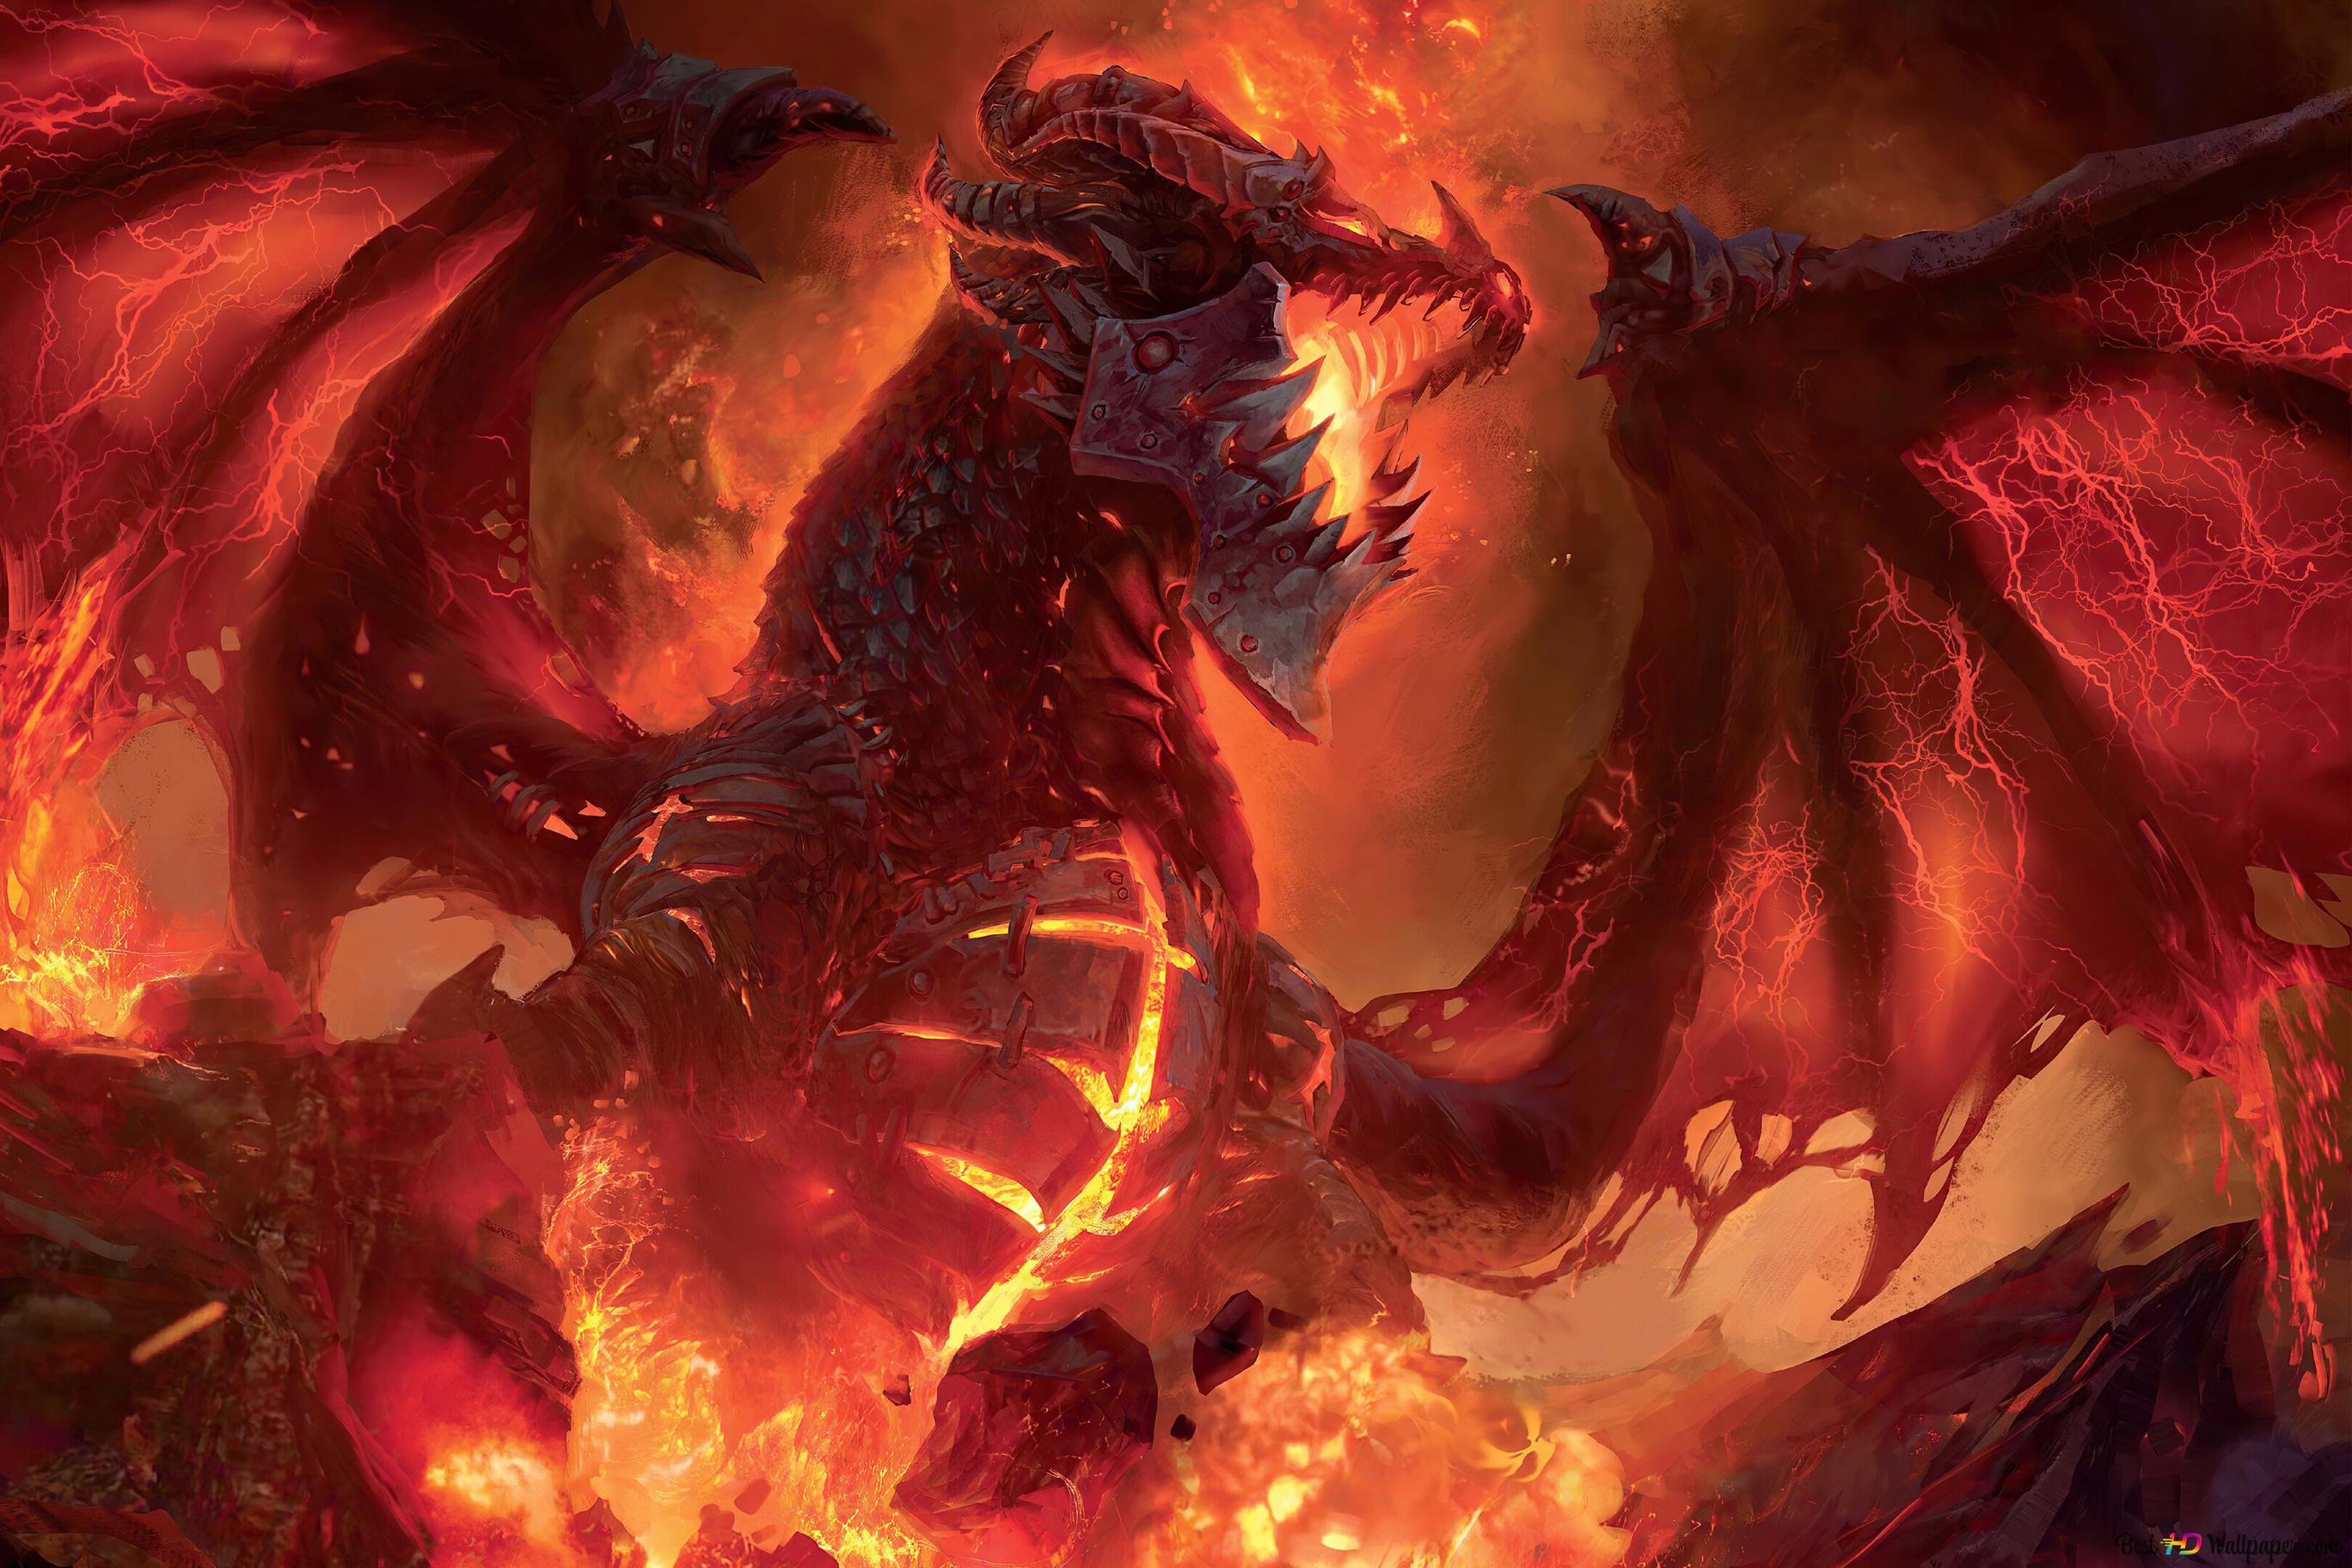 Fire Dragon of Warcraft (WoW) 4K wallpaper download